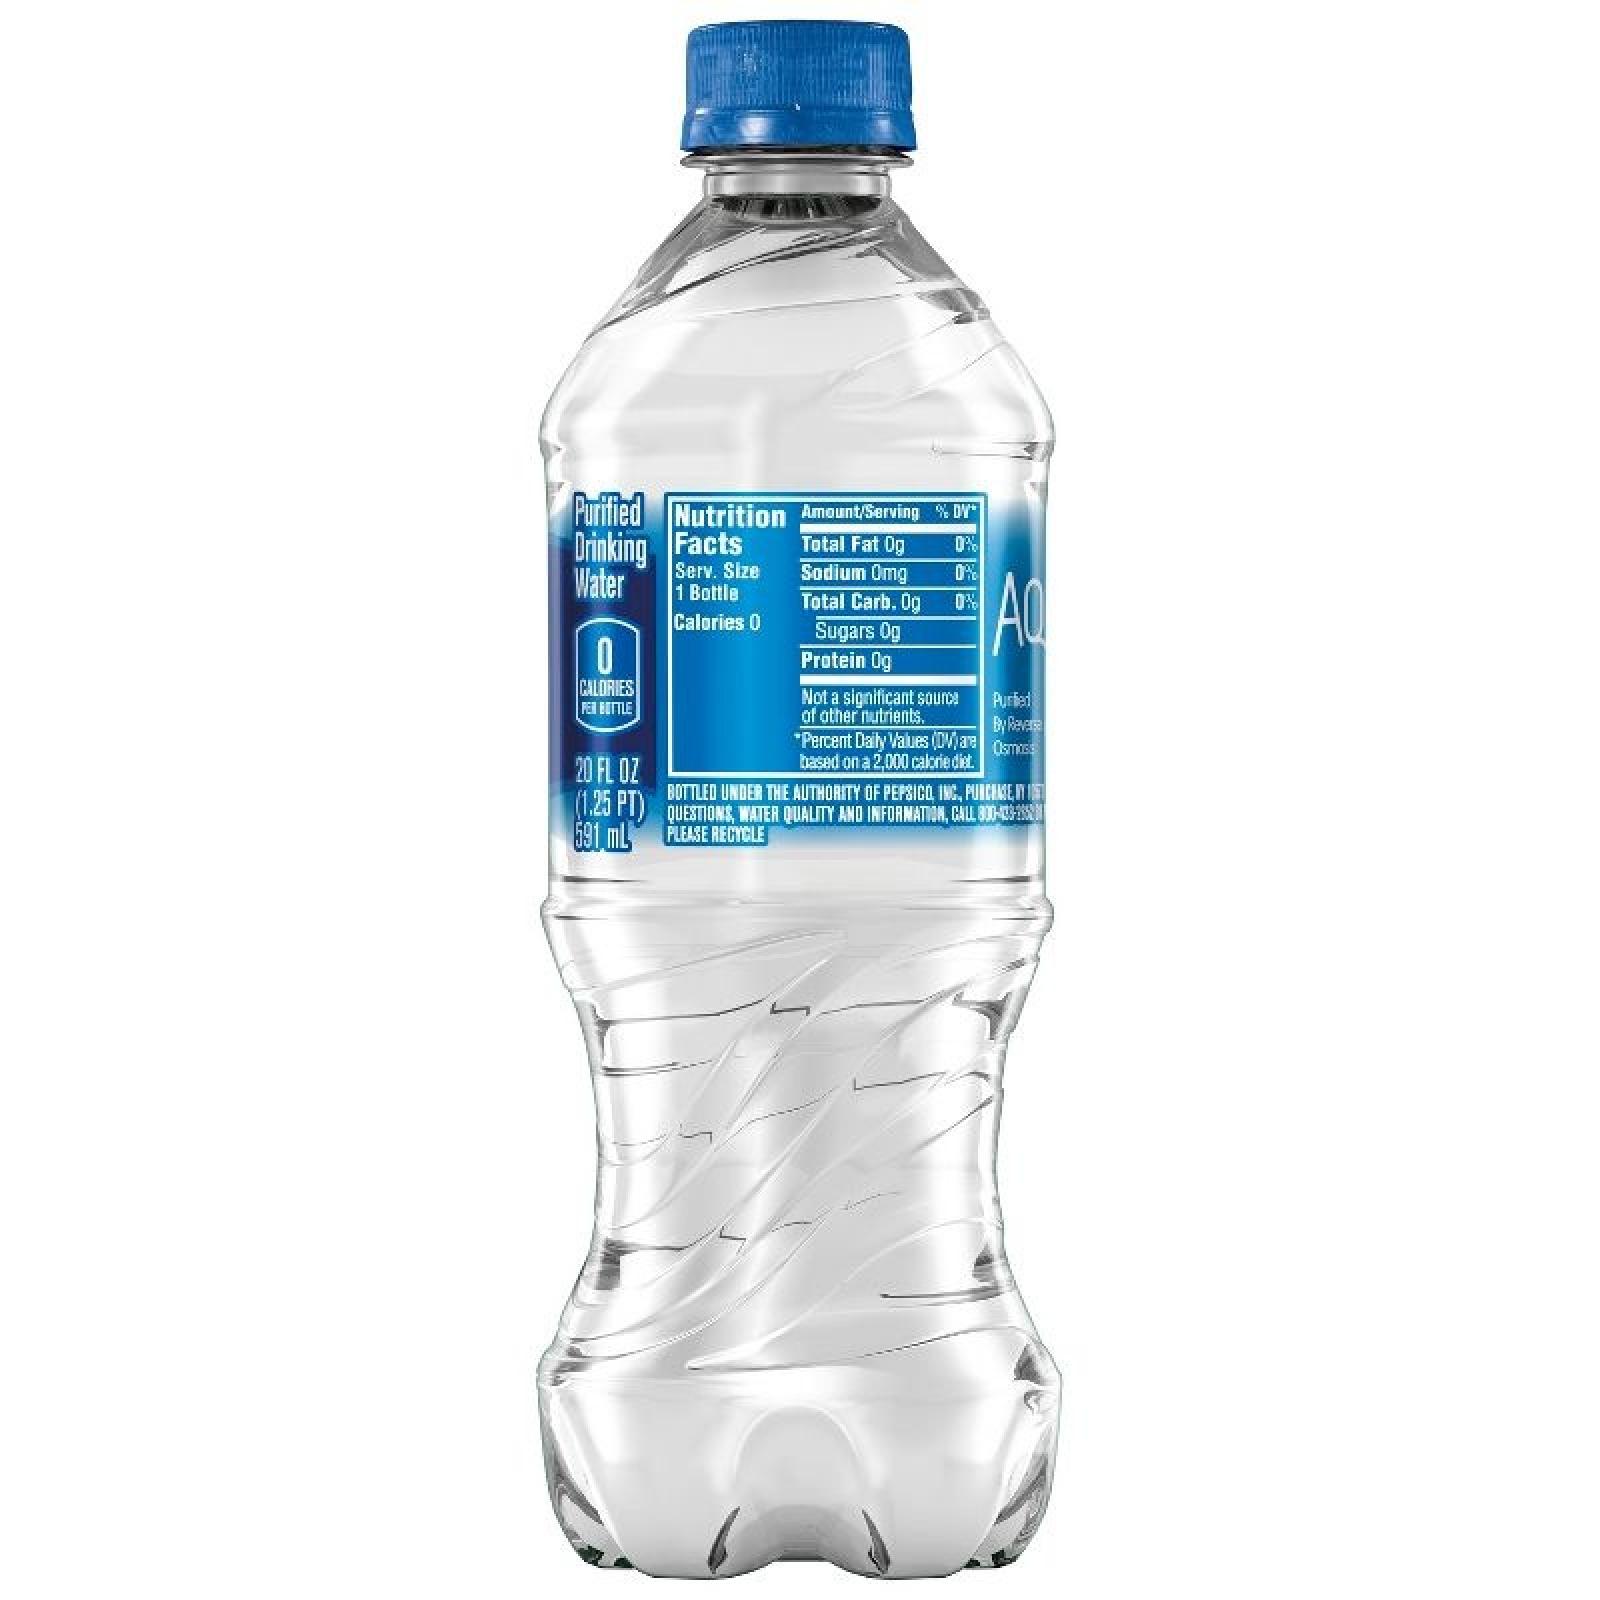 Aquafina Pure Unflavored Water